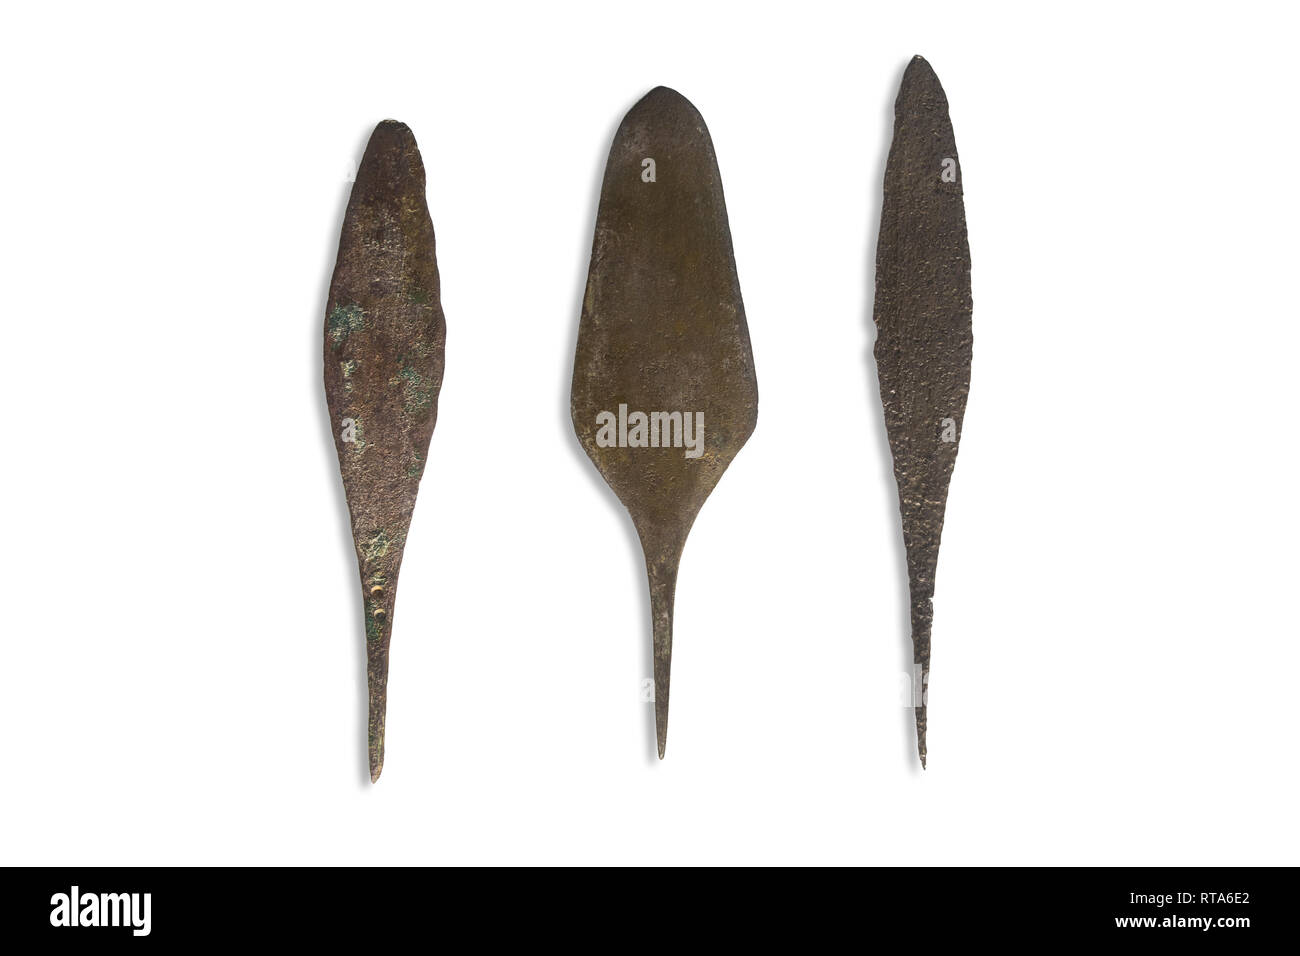 Cordoba, Spain - September 8th, 2018: 3 primitive metal arrowheads Palmela type at Archaeological Museum of Cordoba, Spain Stock Photo